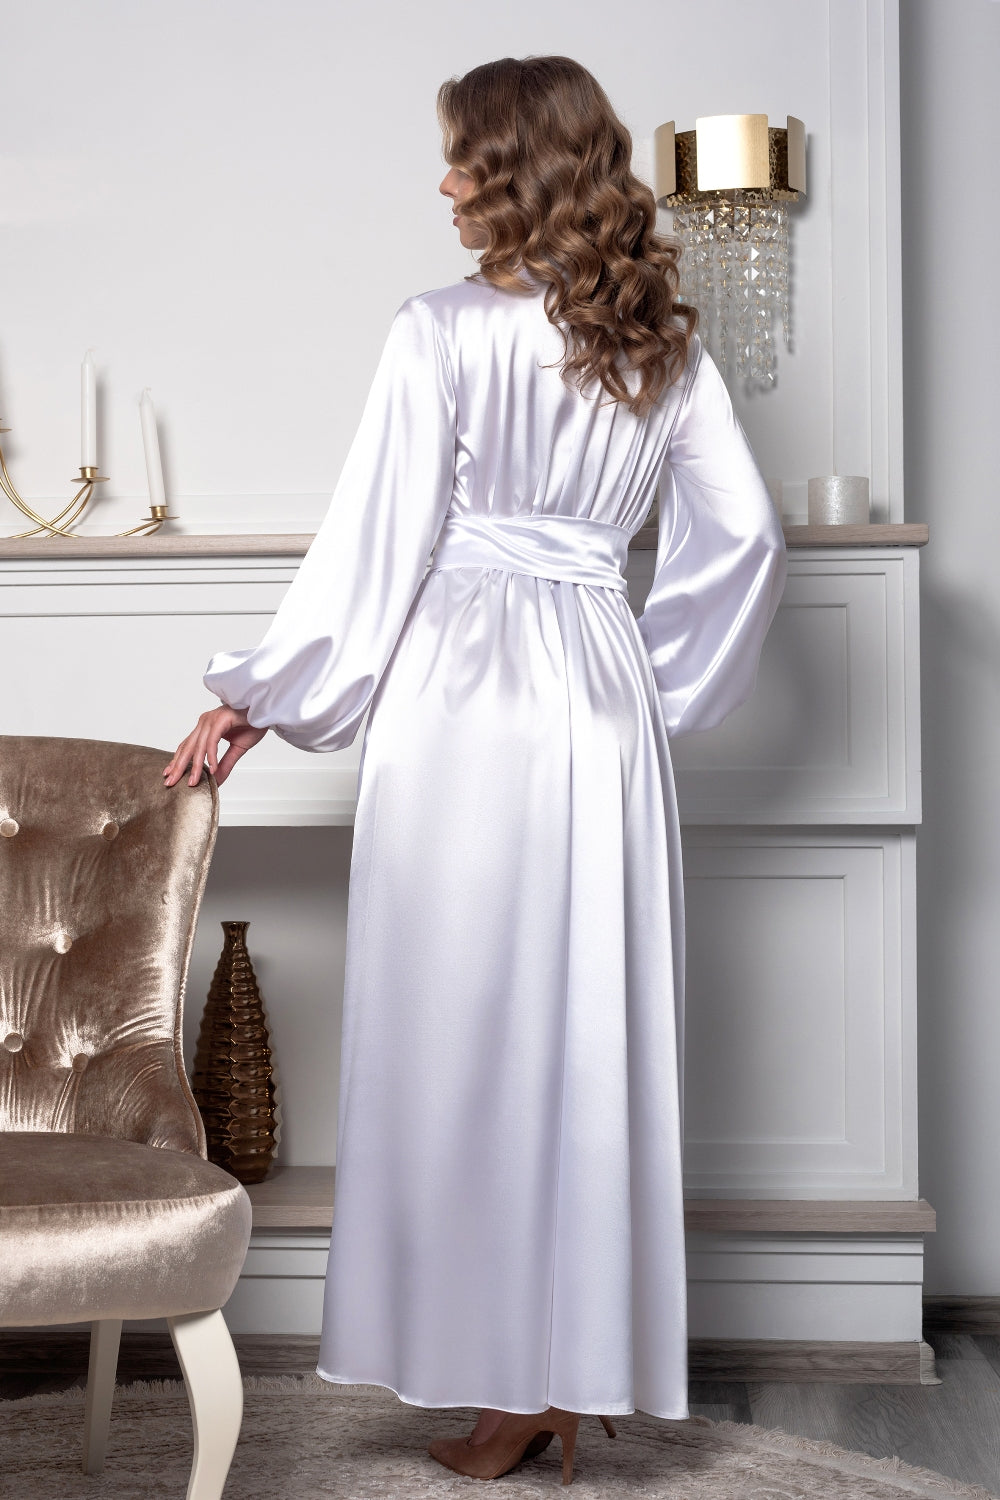 A bride wearing the elegant White Long Bridal Robe